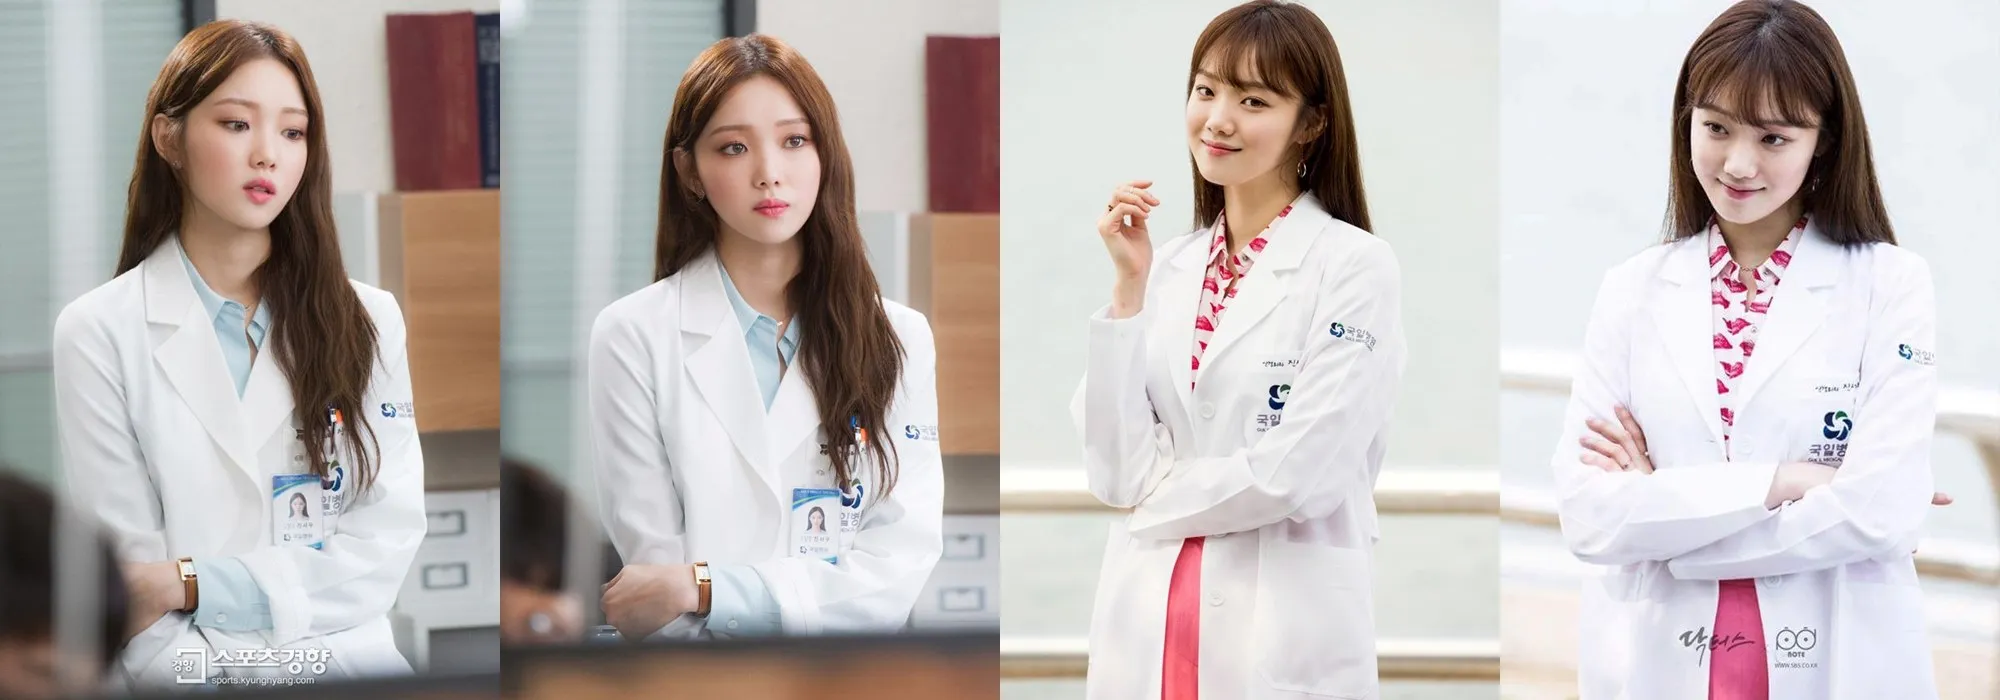 voh-lee-sung-kyung-phim-doctors-3